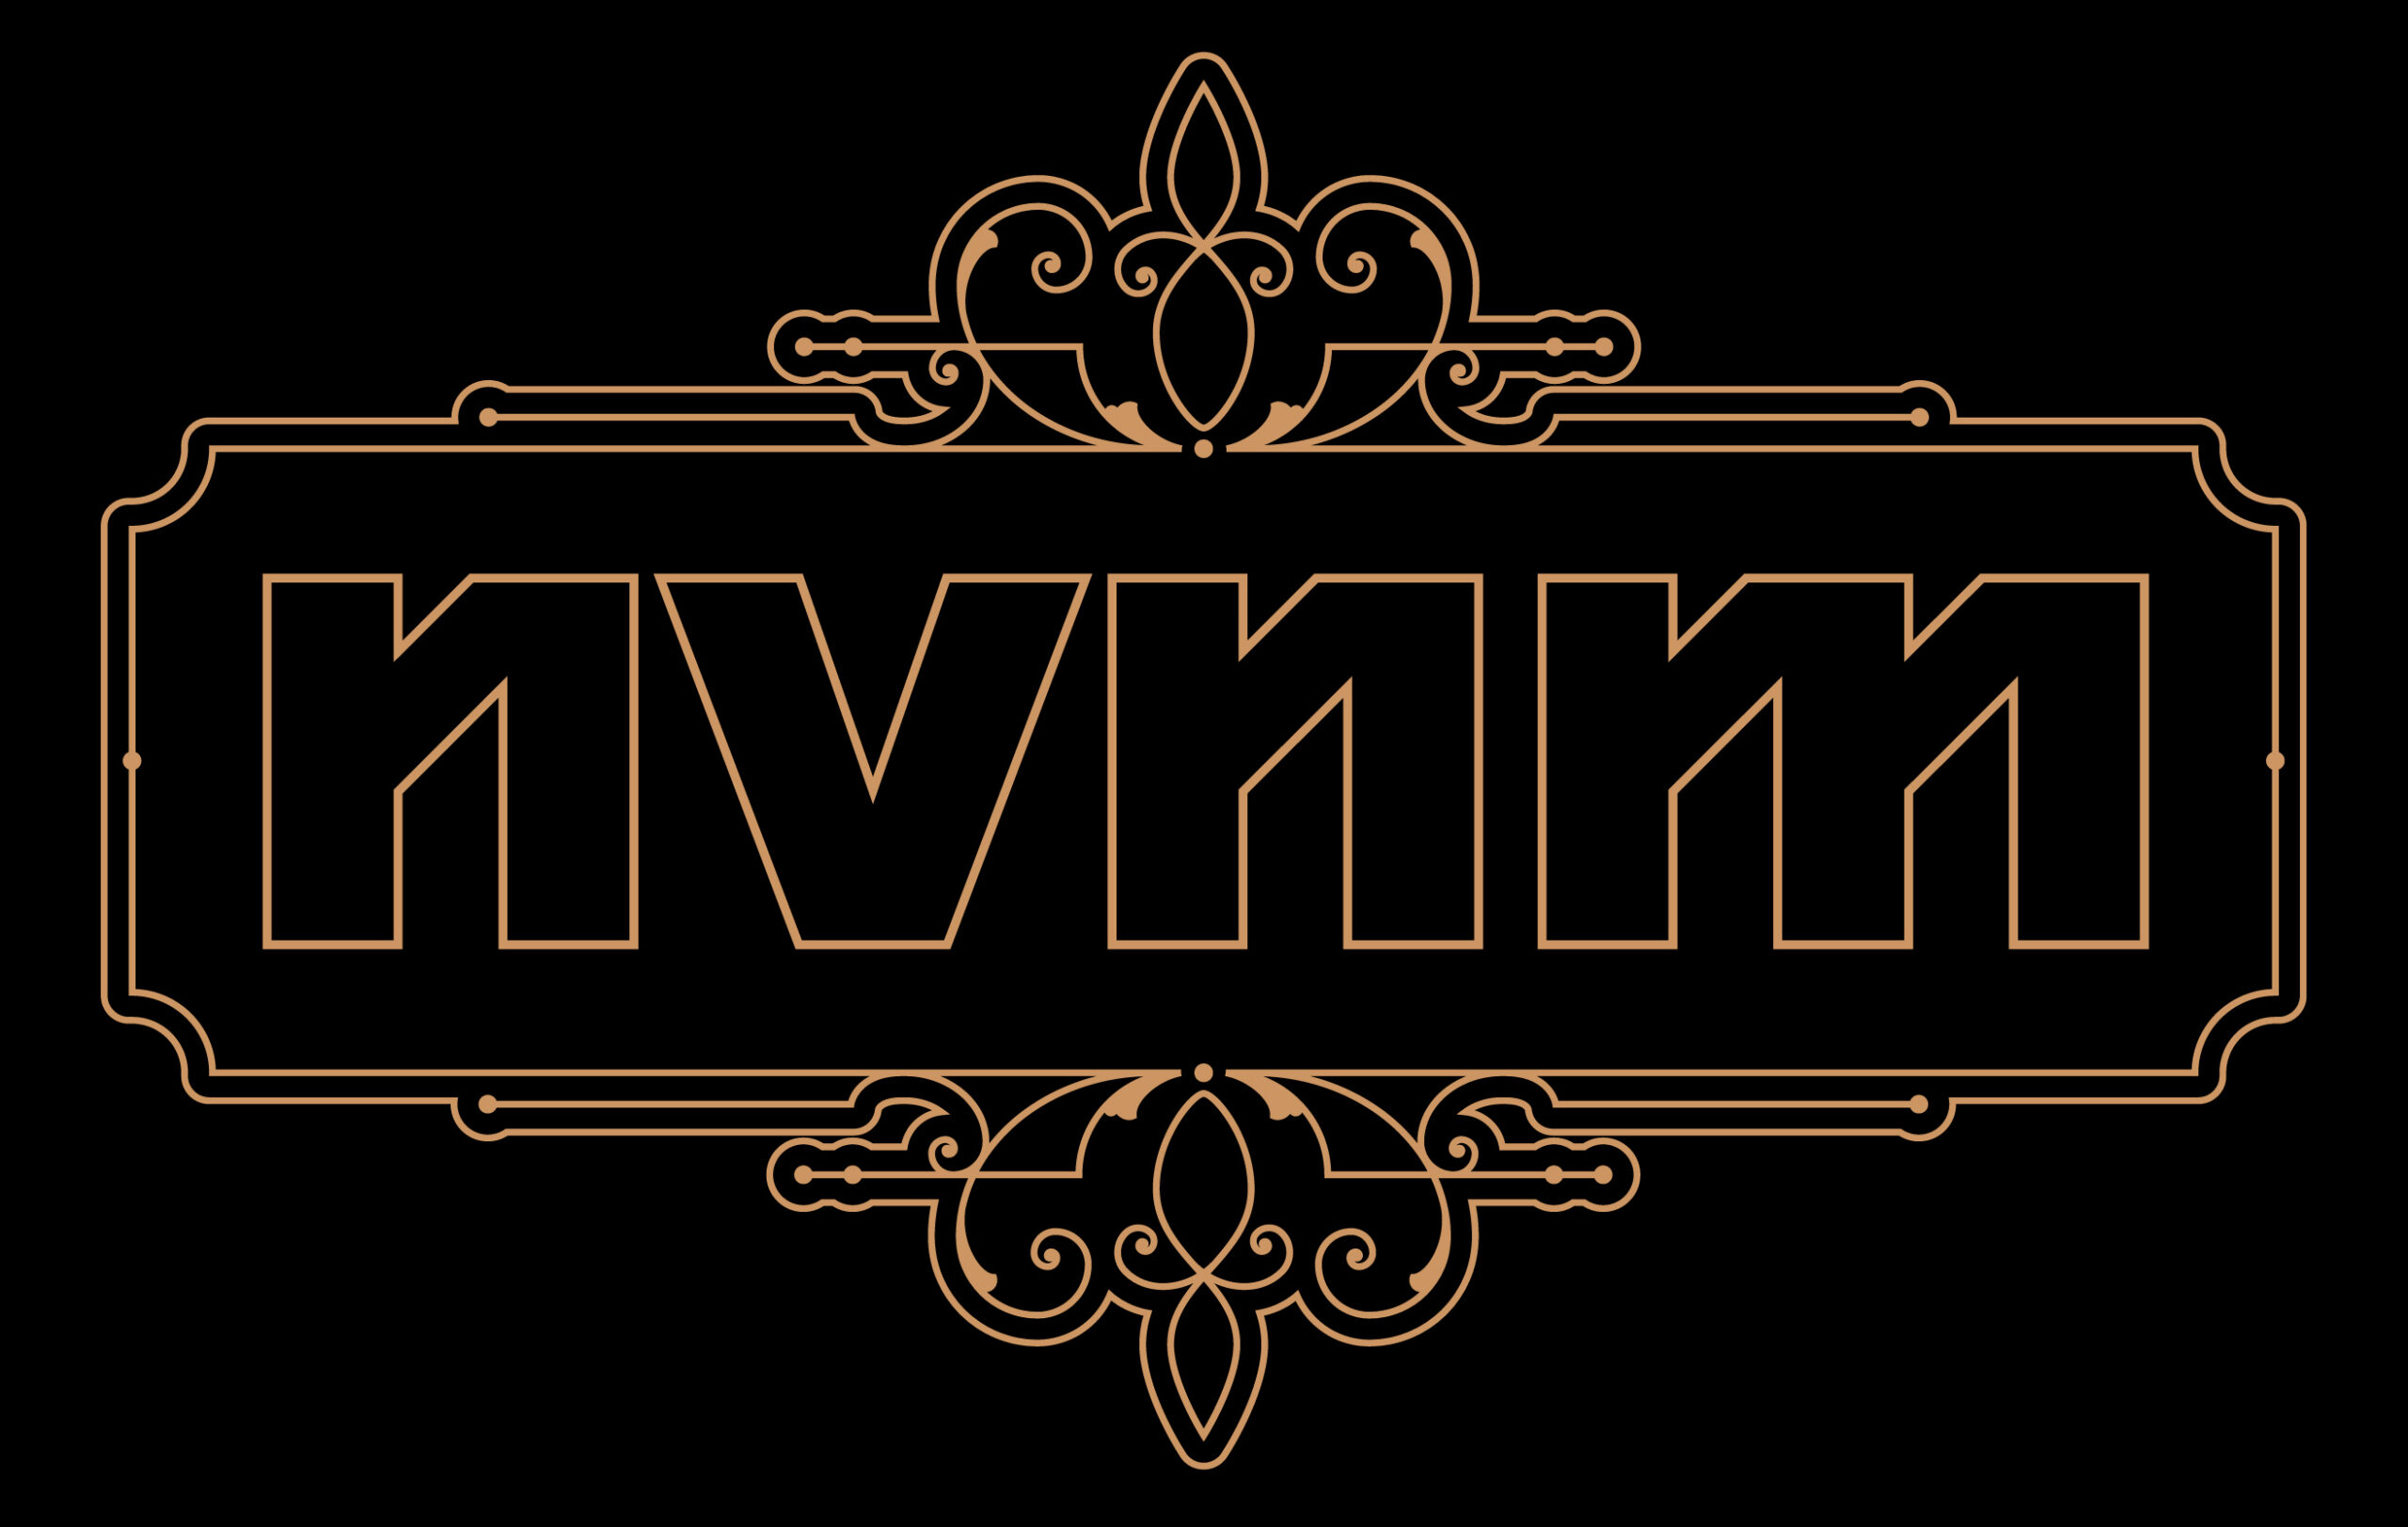 NVNM gold wireframe logo